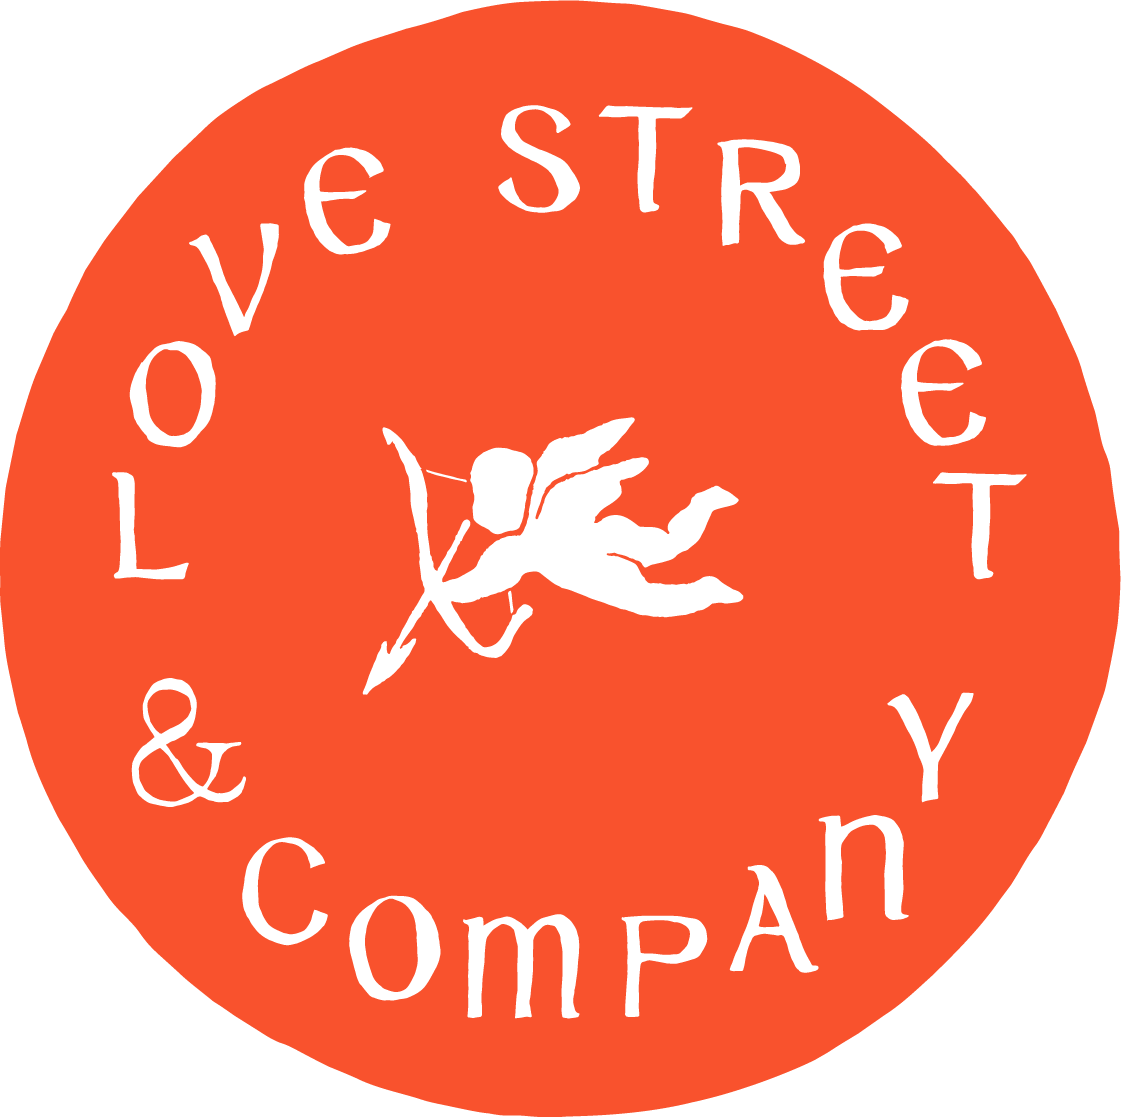 Love Street & Company